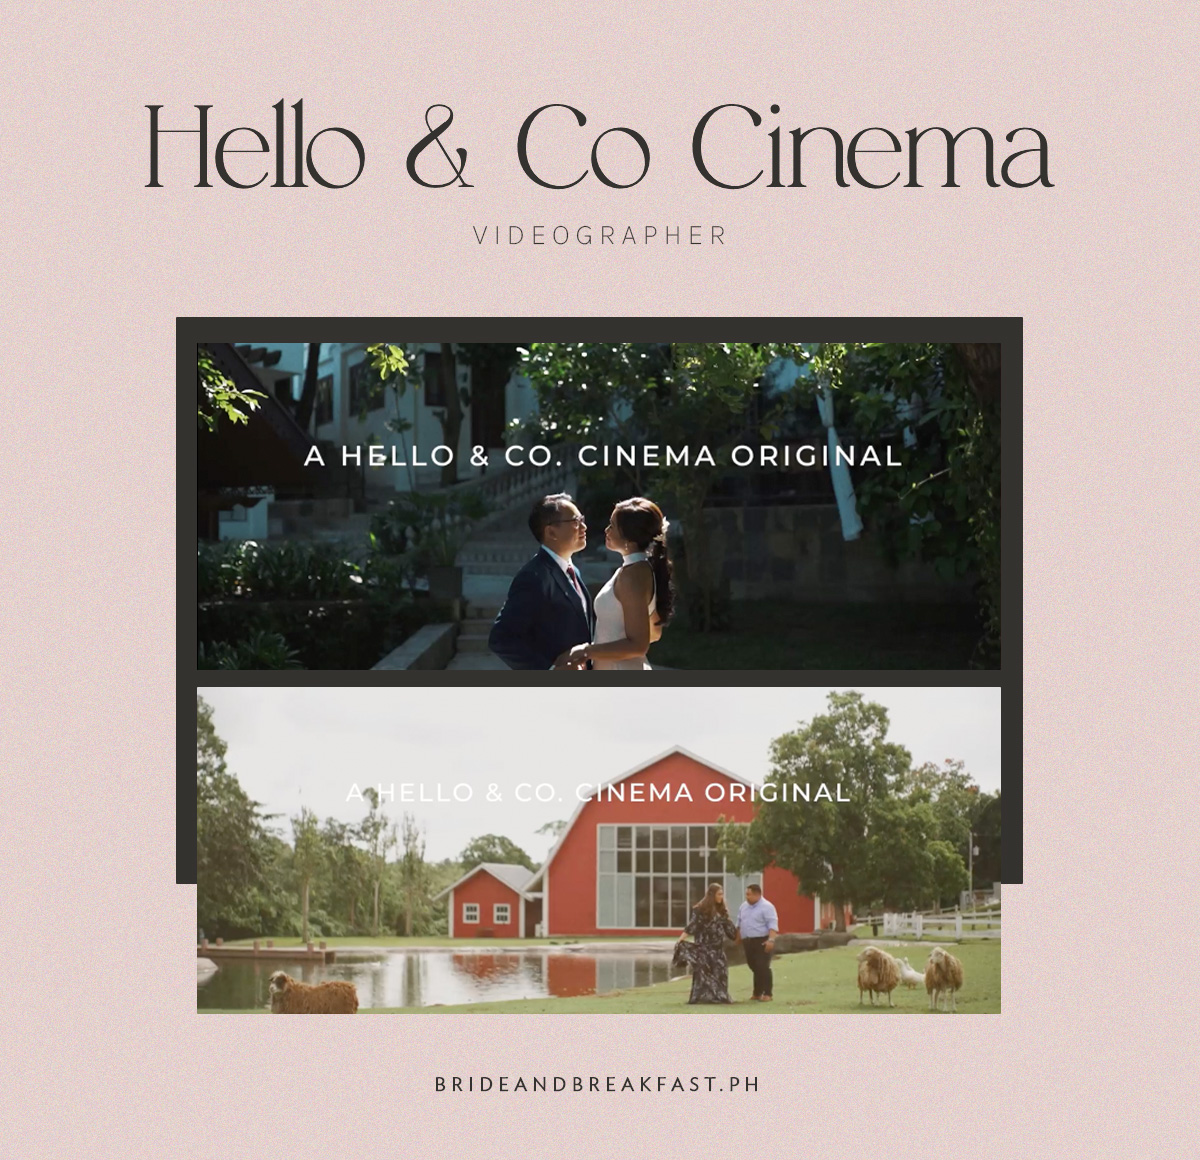 Hello & Co Cinema